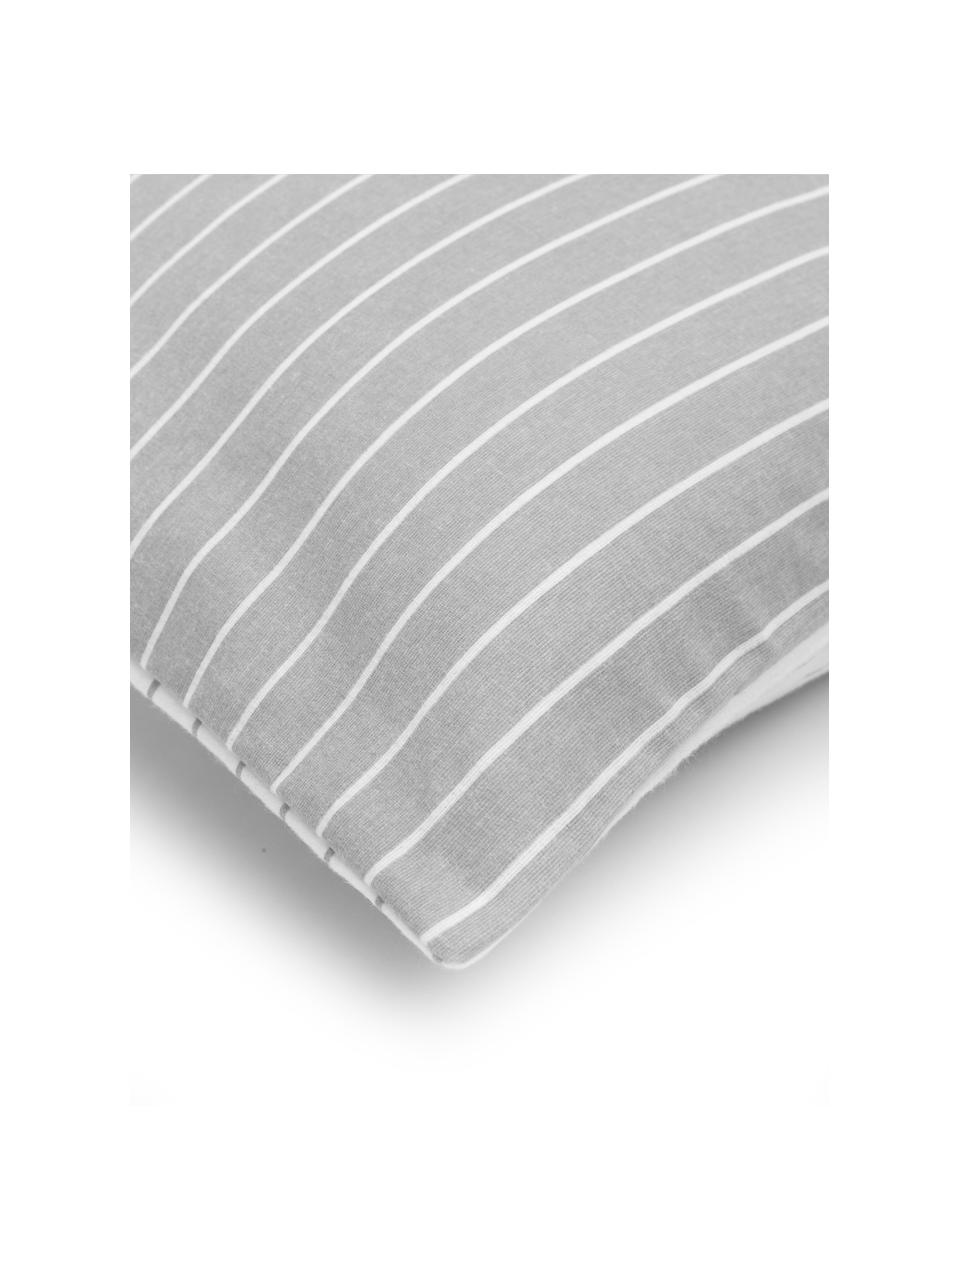 Gestreifte Flanell-Wendekissenbezüge Talin in Grau, 2 Stück, Webart: Flanell Flanell ist ein k, Grau, Weiss, B 40 x L 80 cm